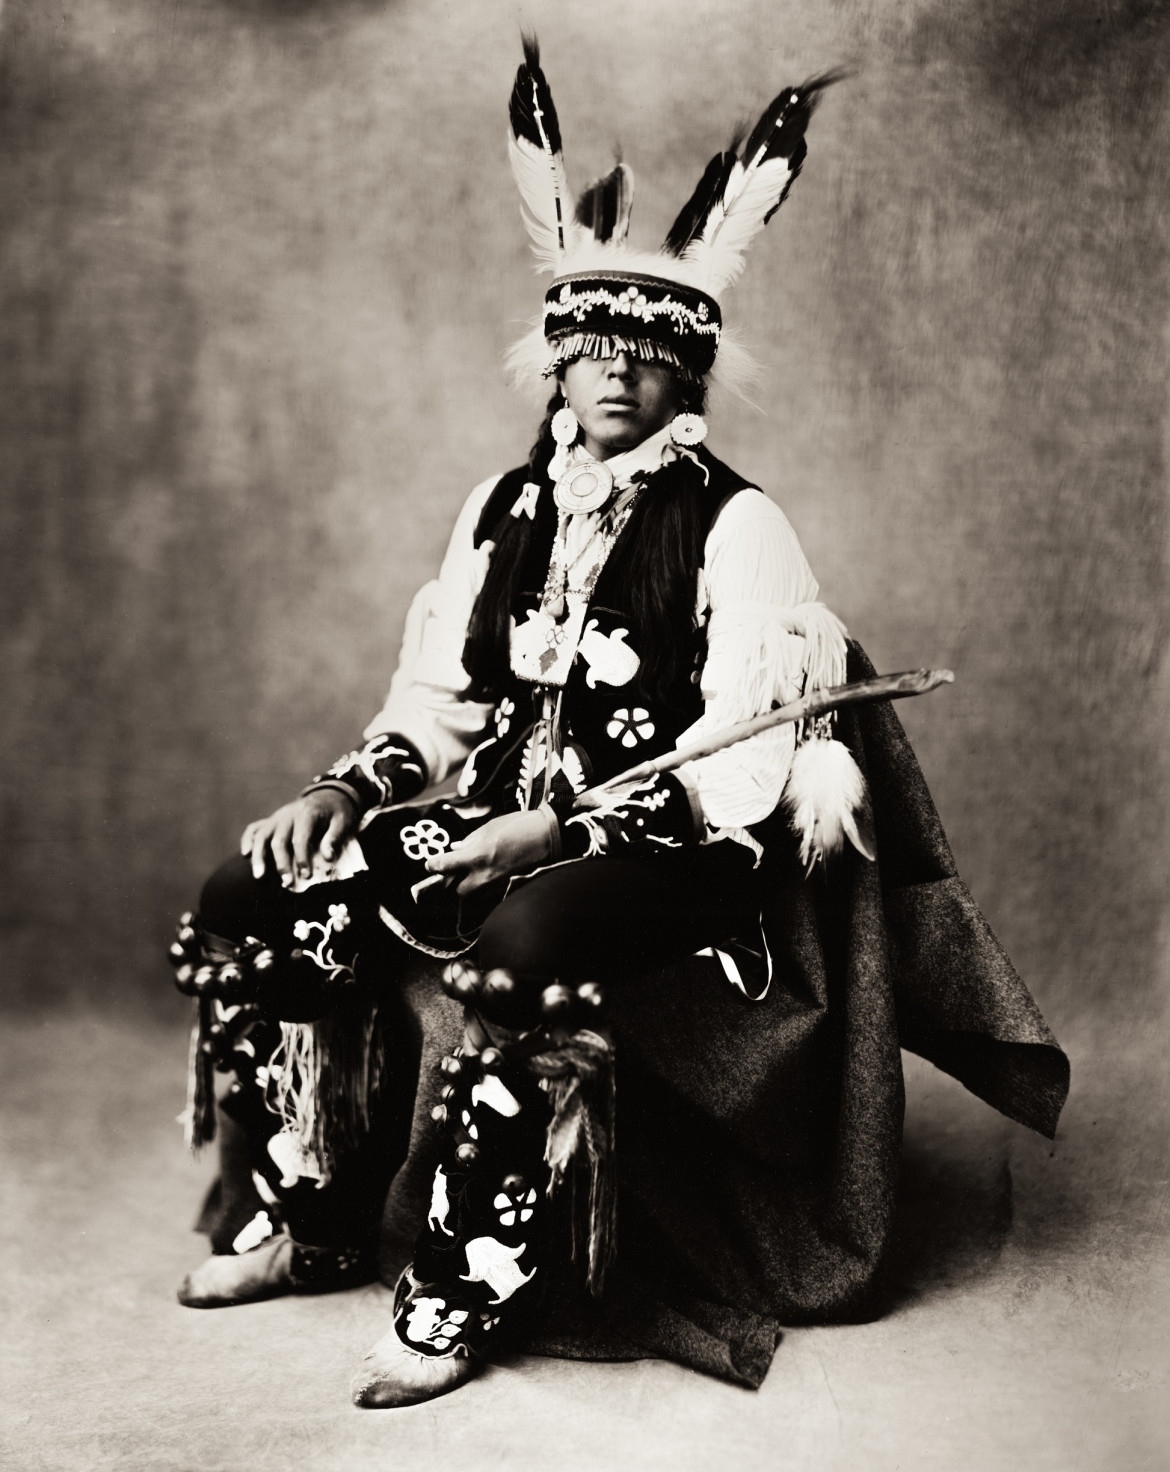 fot. Shane Balkowitsch, na zdjęciu Miisheen Meegwun Shawanda. Z projektu Northern Plains Native Americans: A Modern Wet Plate Perspective